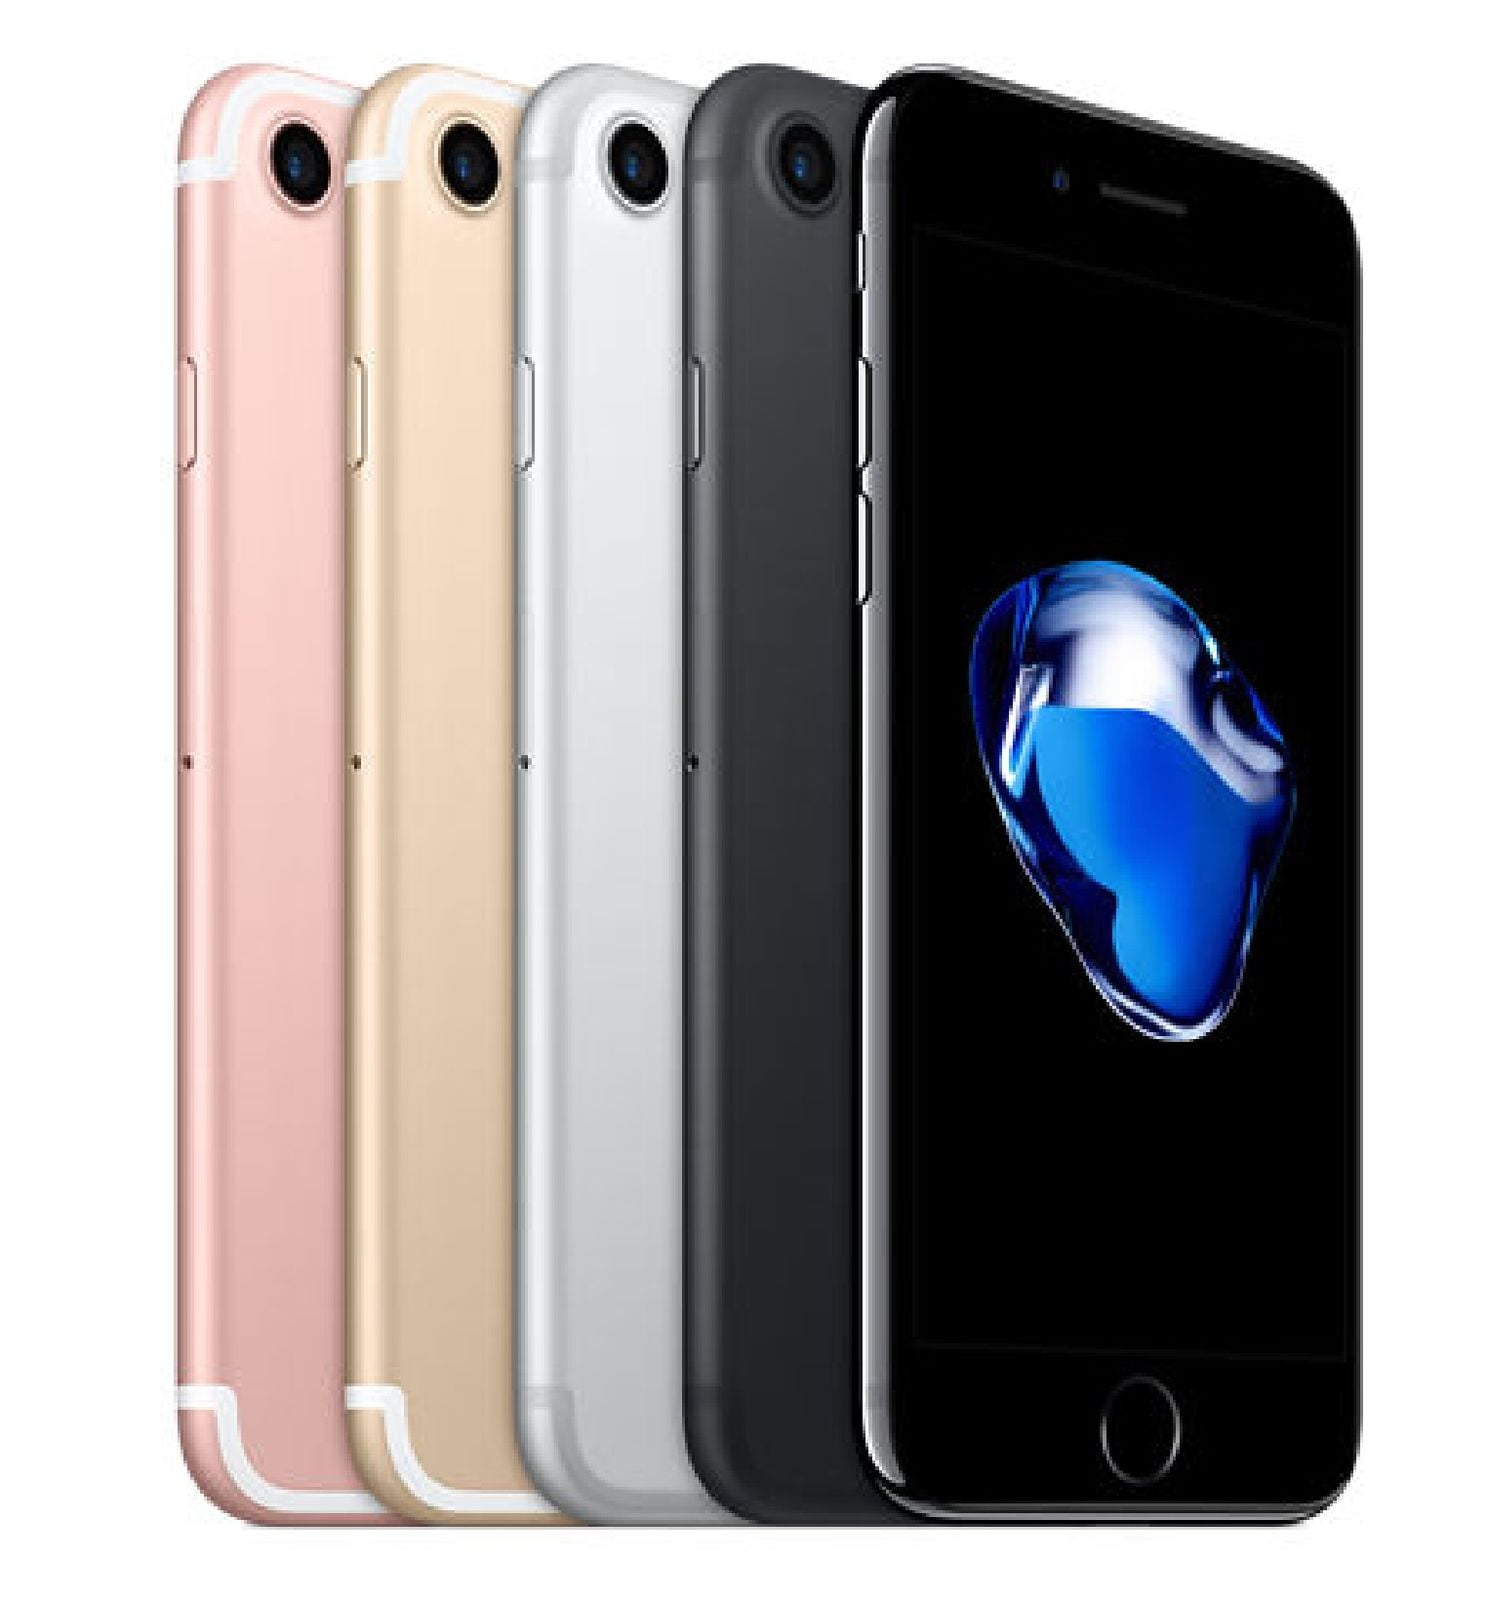 Refurbished Apple iPhone 7 128GB, Rose Gold - Unlocked GSM 